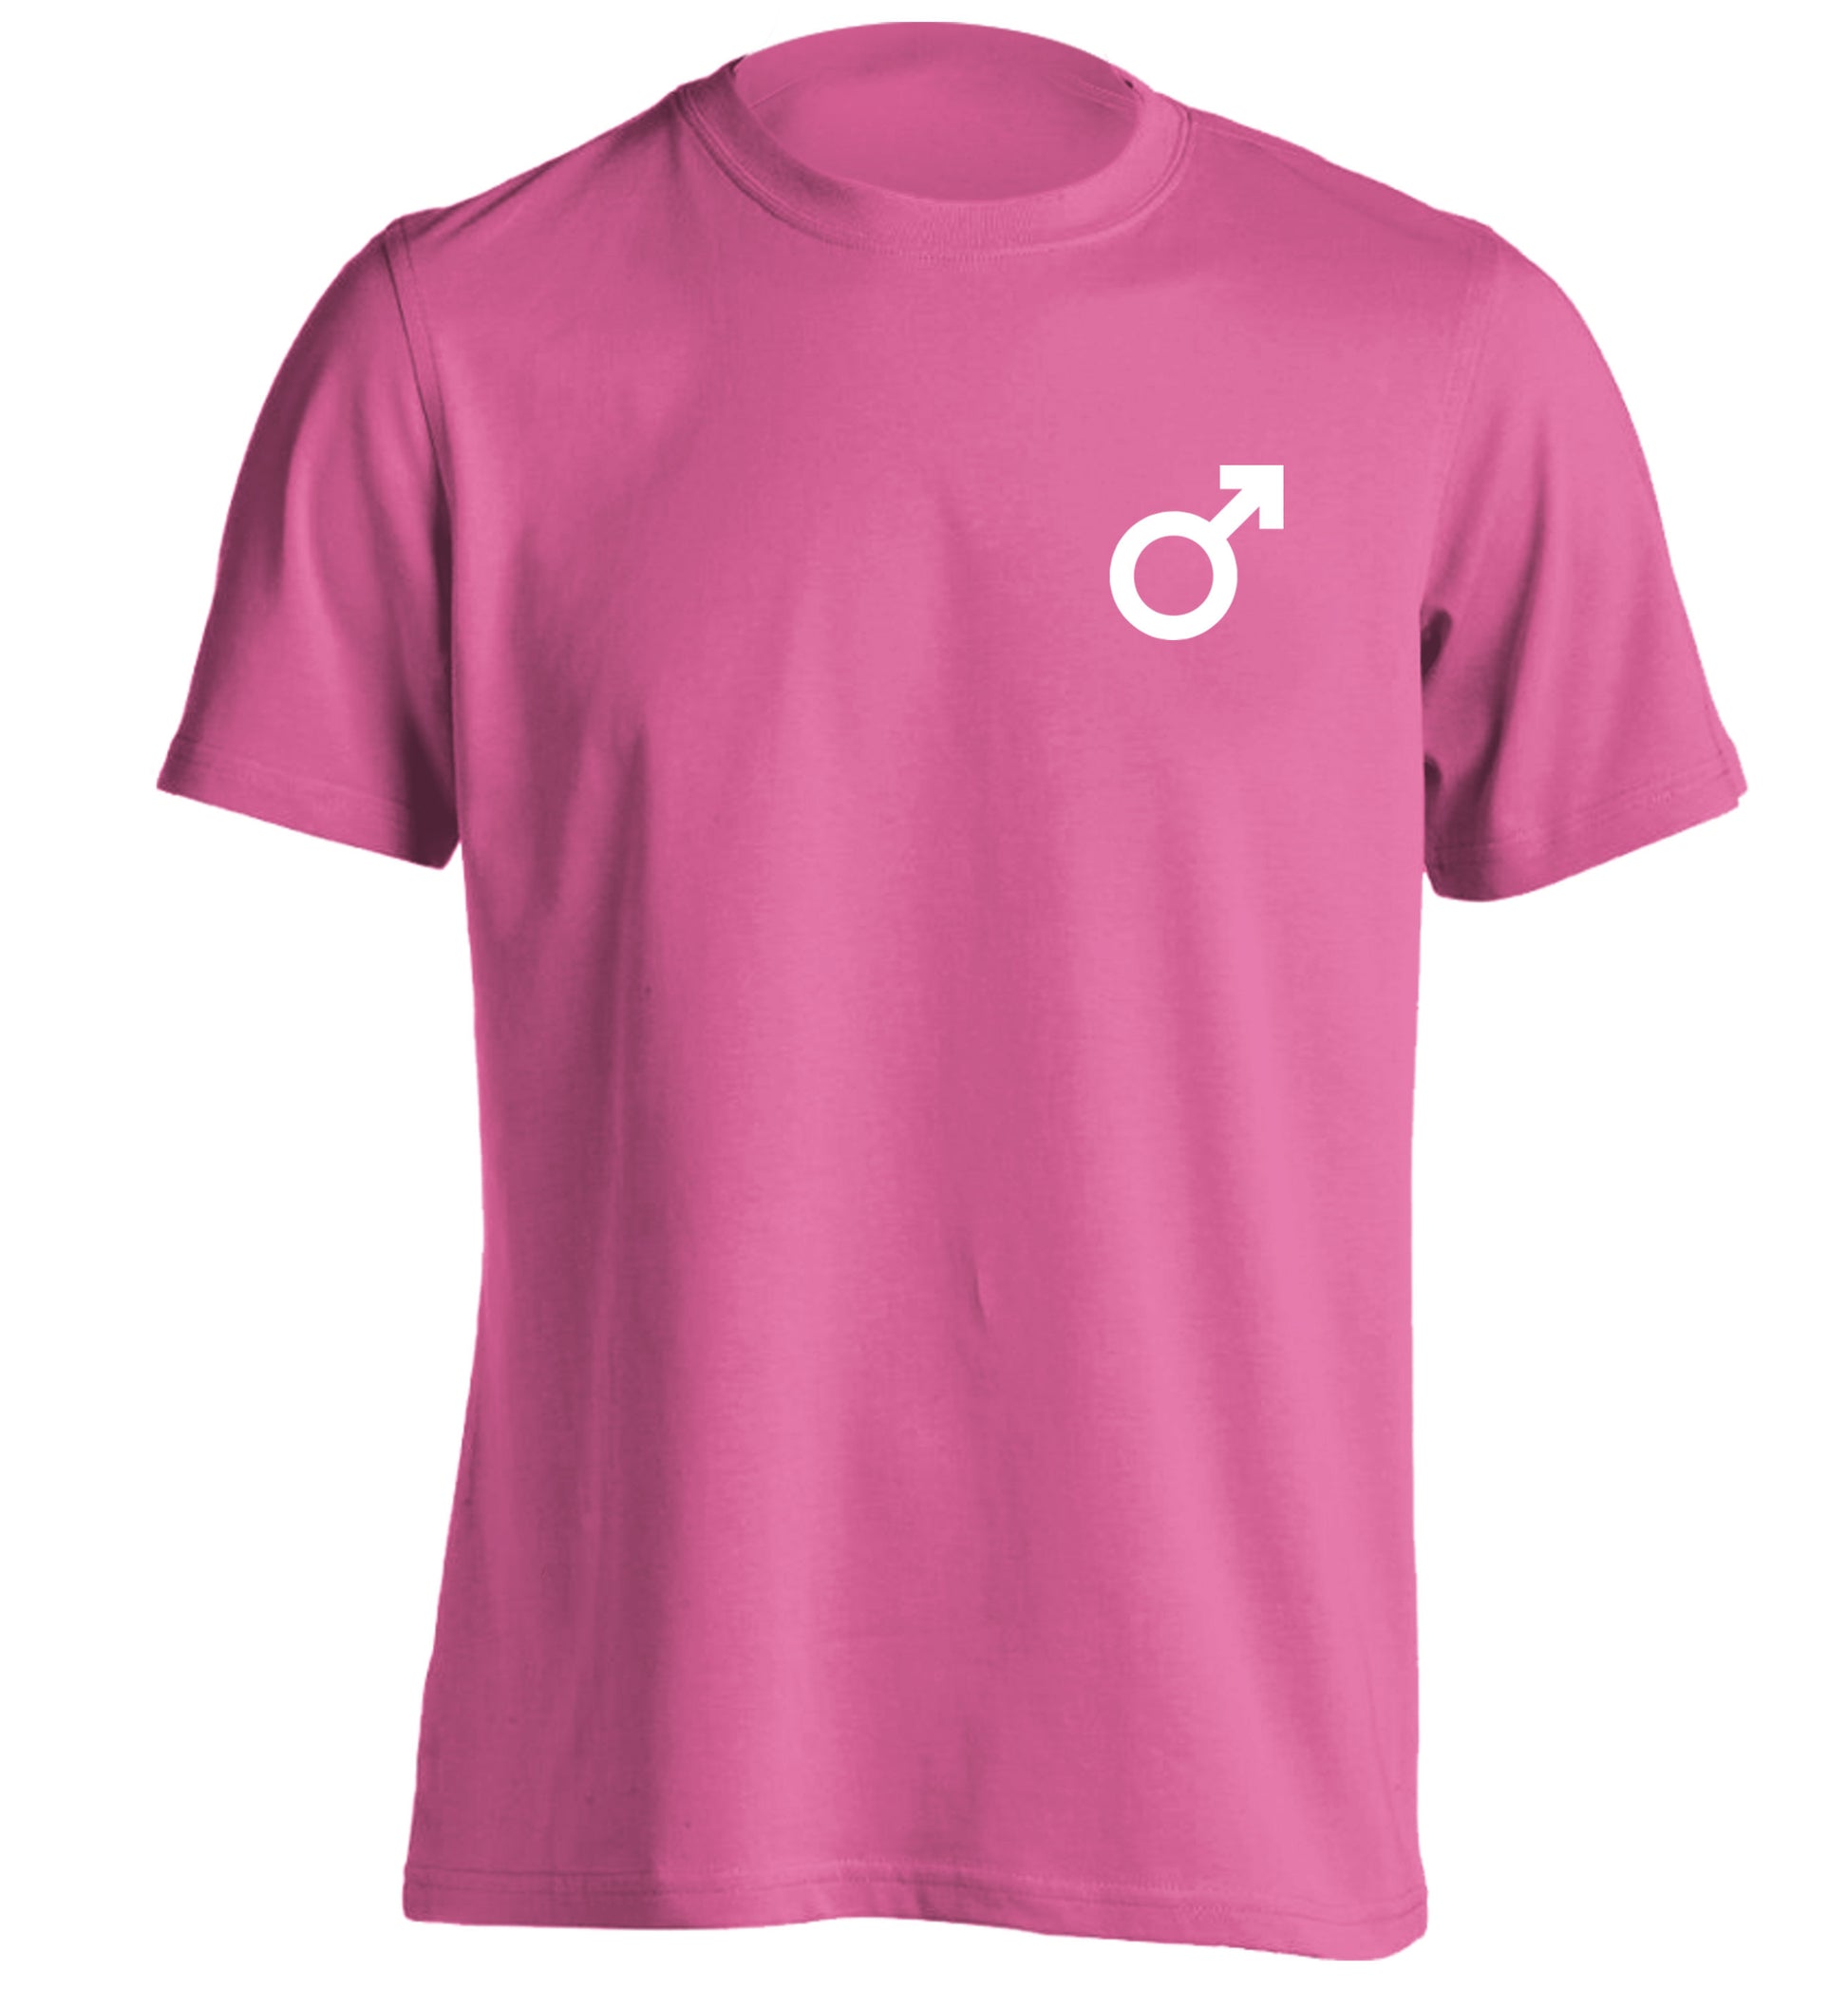 Male symbol pocket adults unisex pink Tshirt 2XL